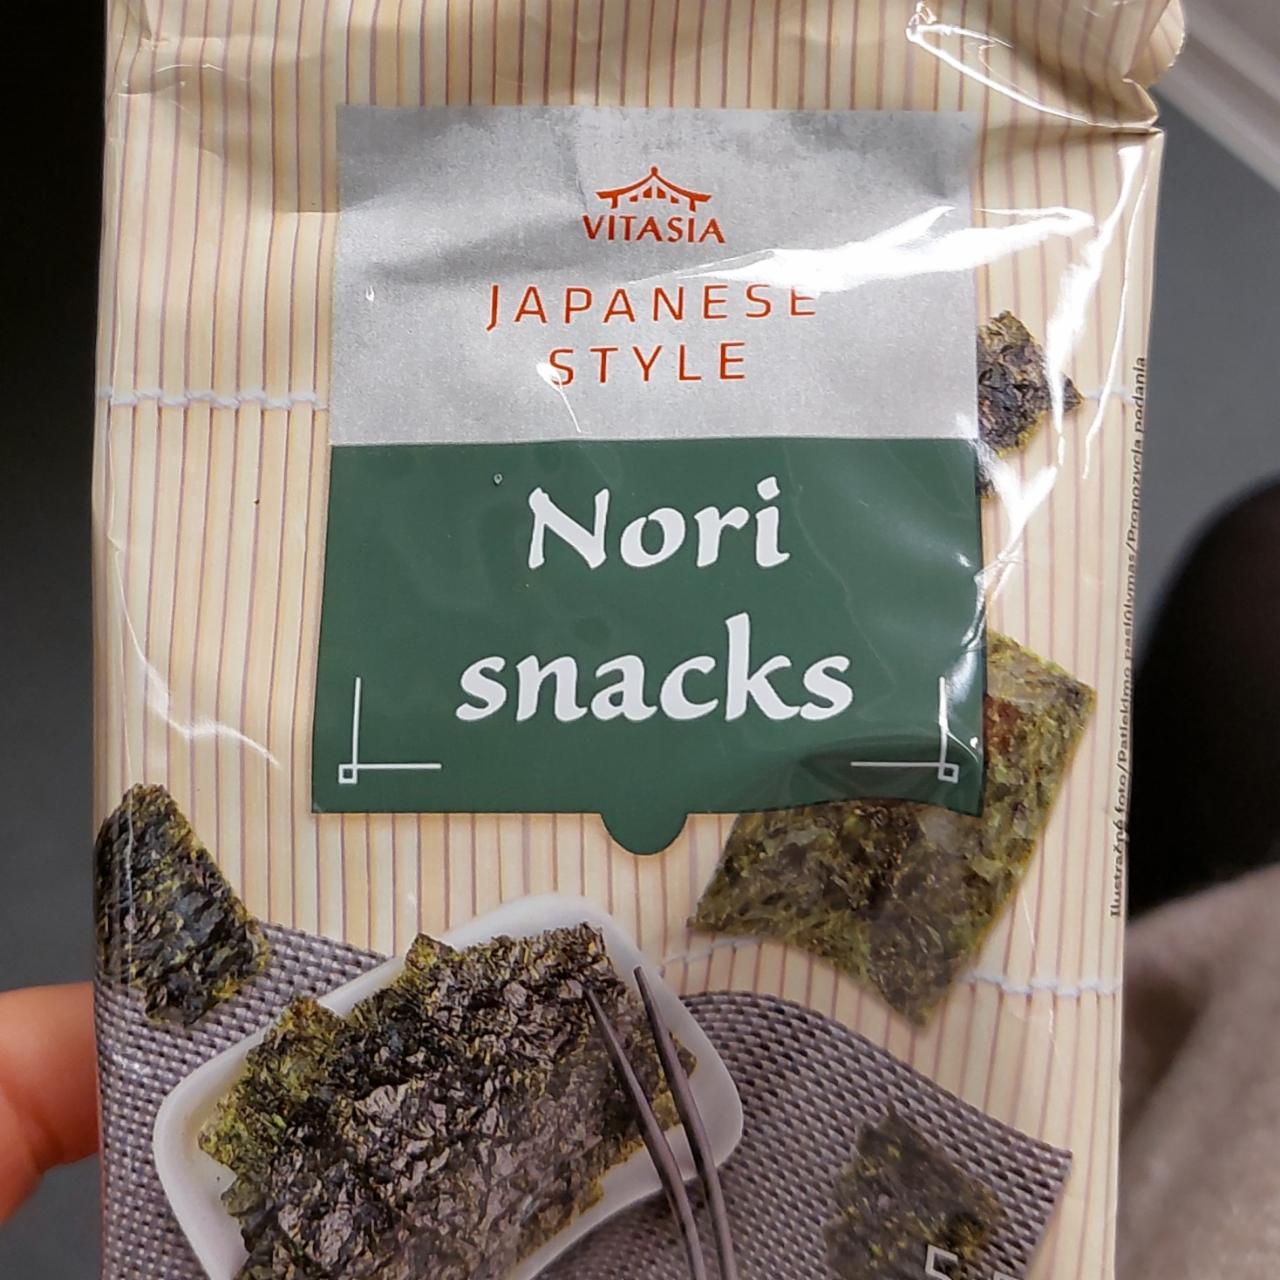 Fotografie - Nori snacks Japanese Style Vitasia